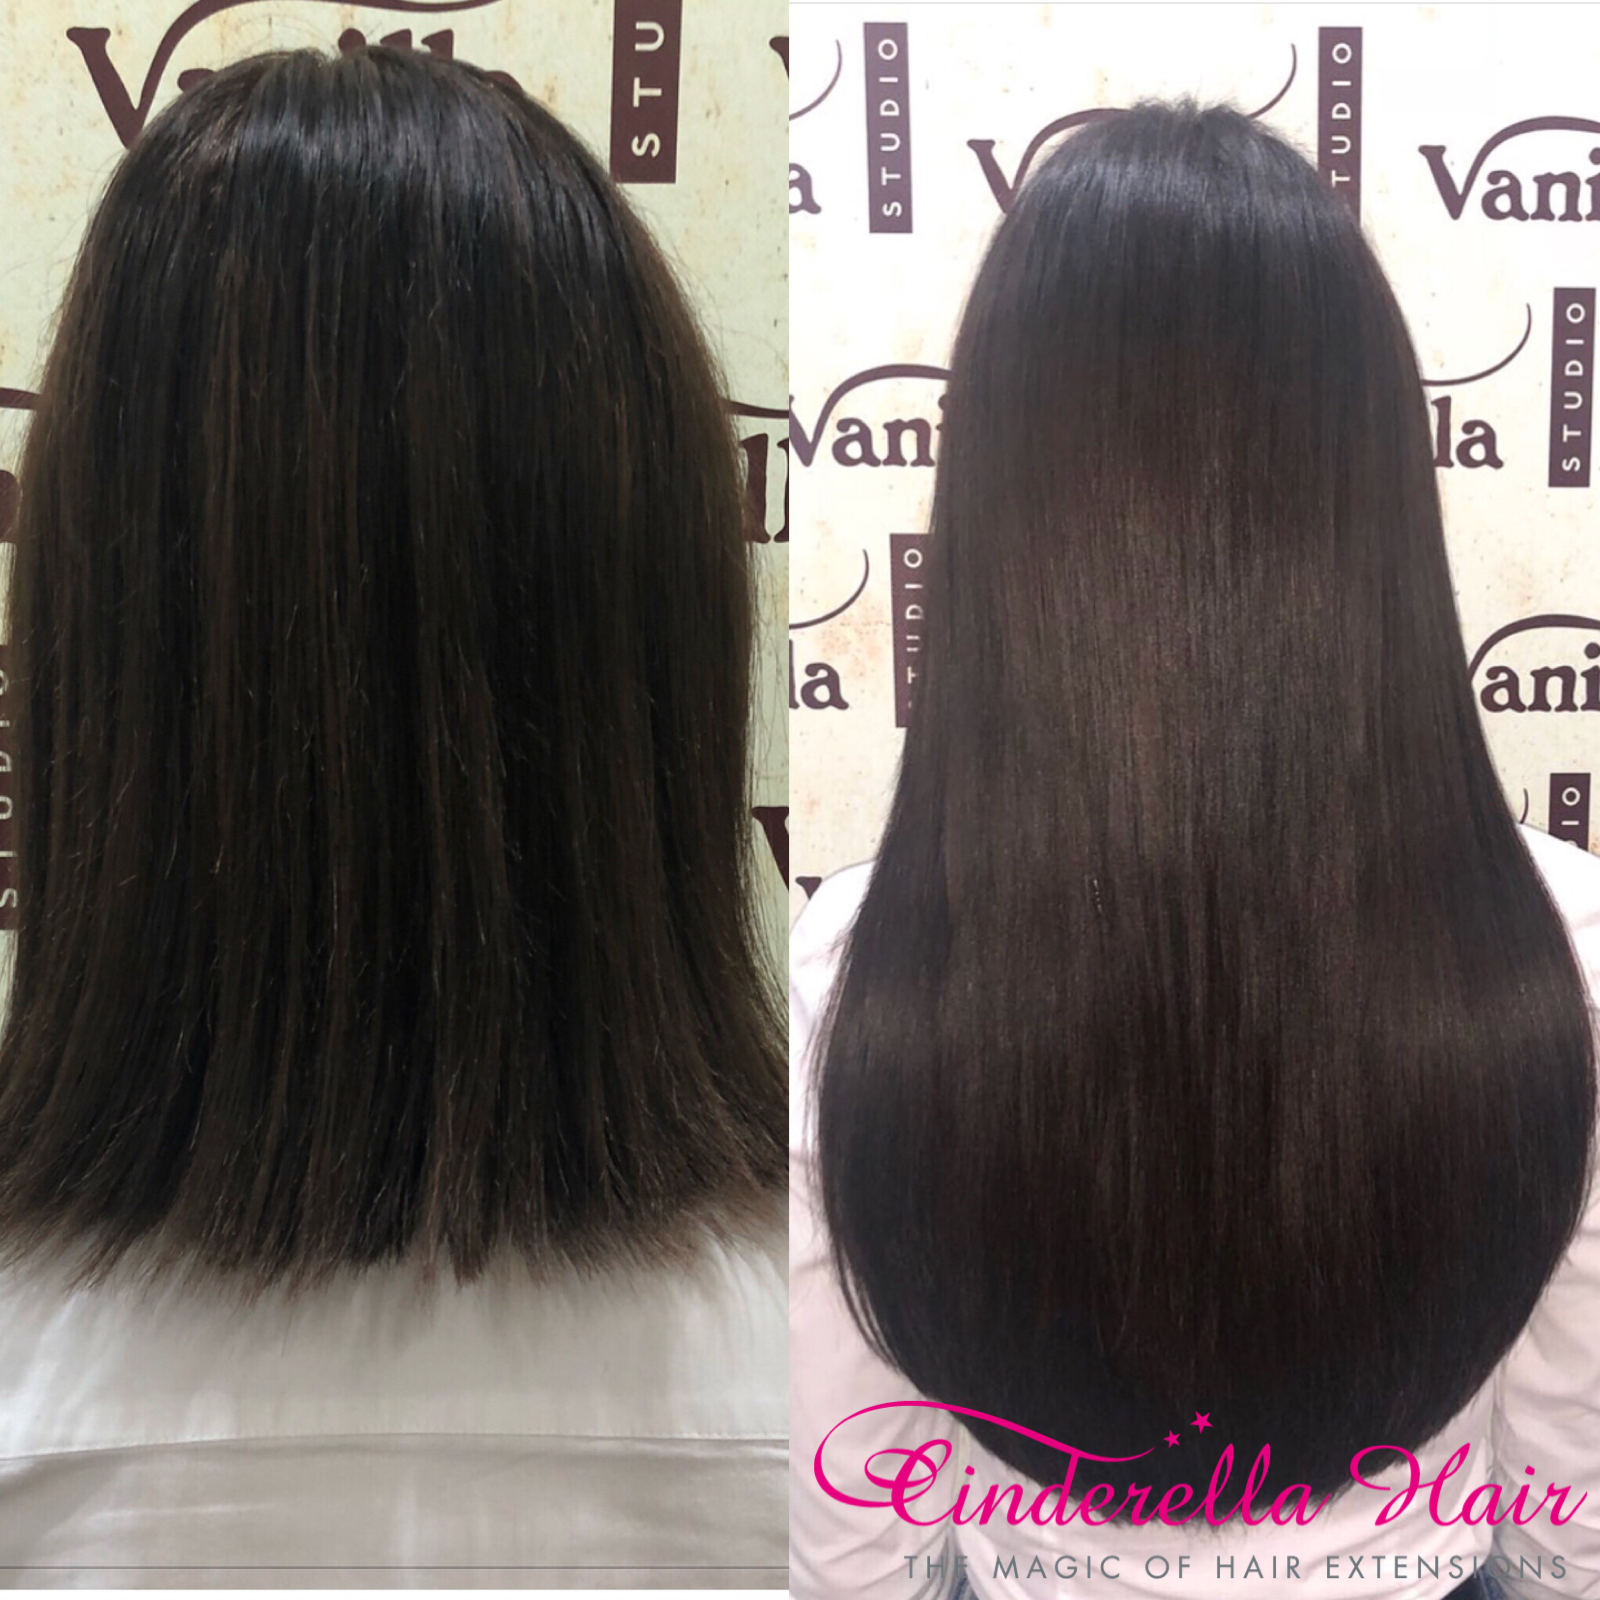 Cinderella Hair Extensions Before After 4 - Cinderella Hair